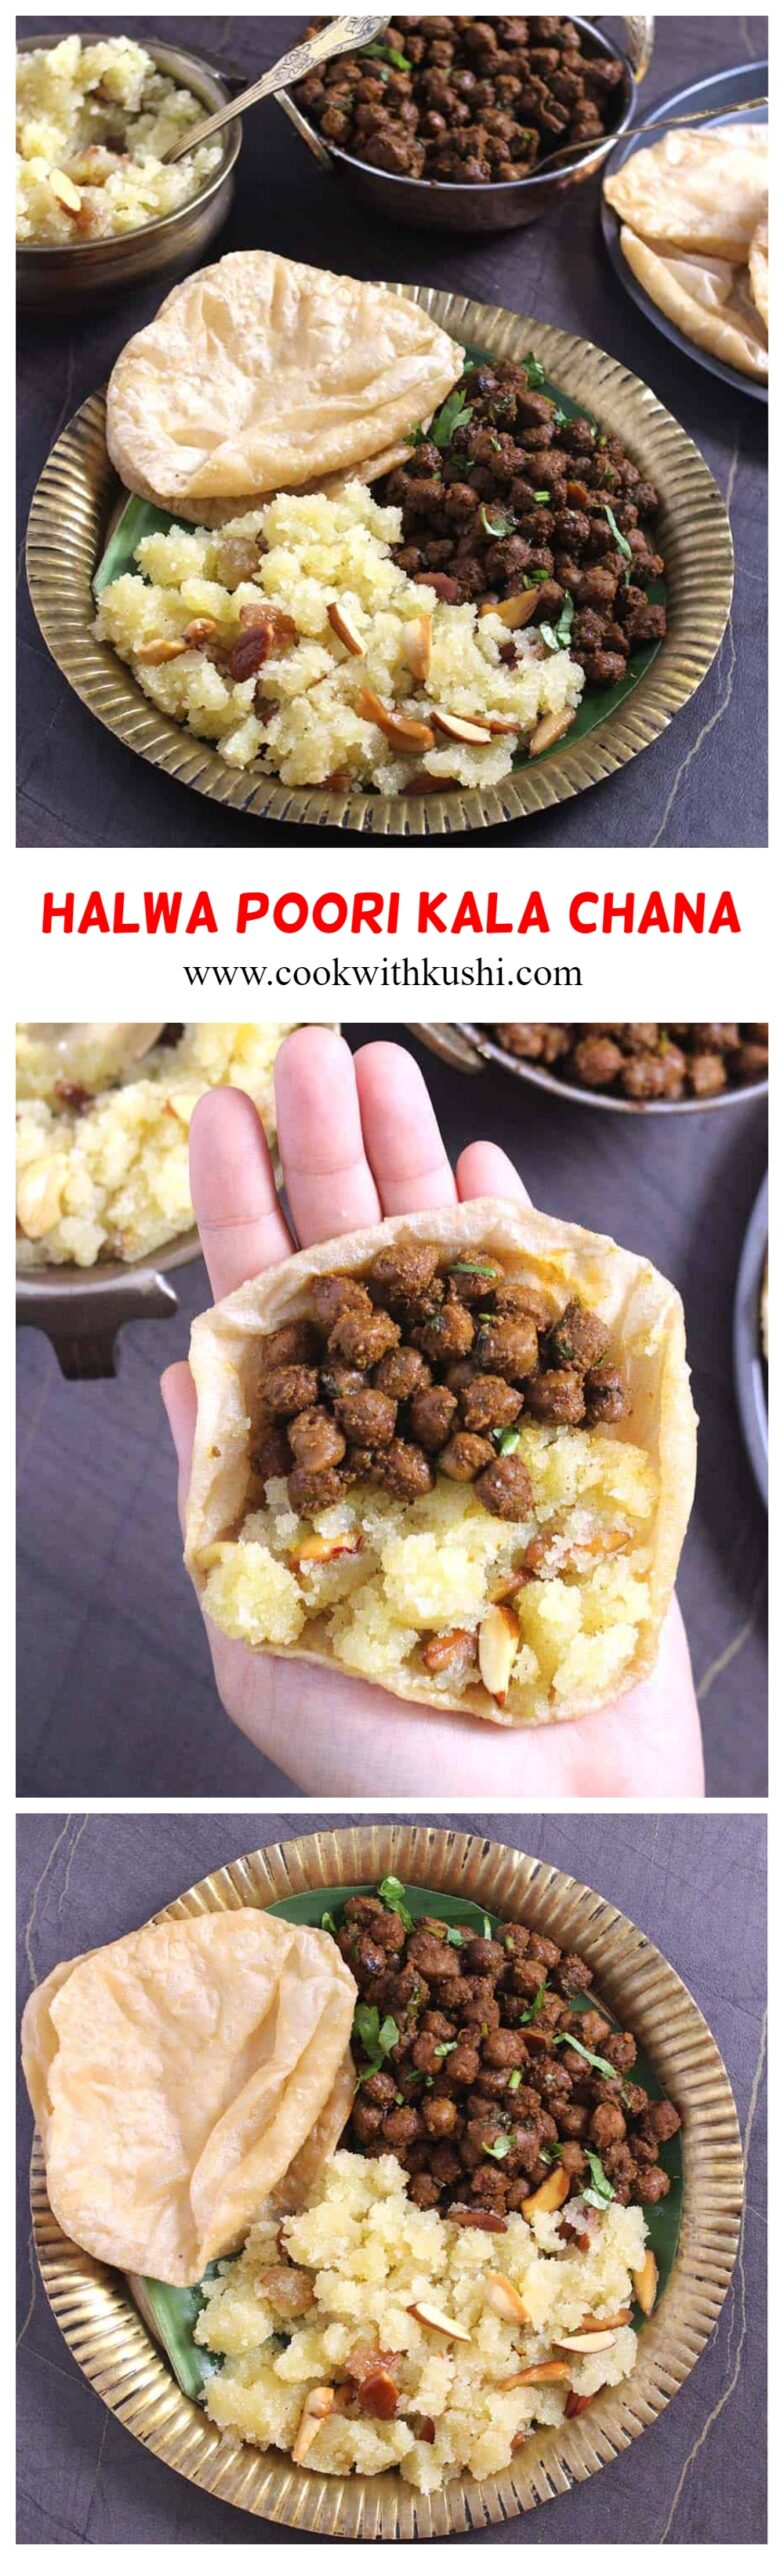 In this post, you will learn how to make three recipes - Halwa (Sheera recipe or Suji Ka Halwa), Sookha or Dry Kala Chana or Cholay, and Poori (Puri). #halwa #puri #chana #prasad